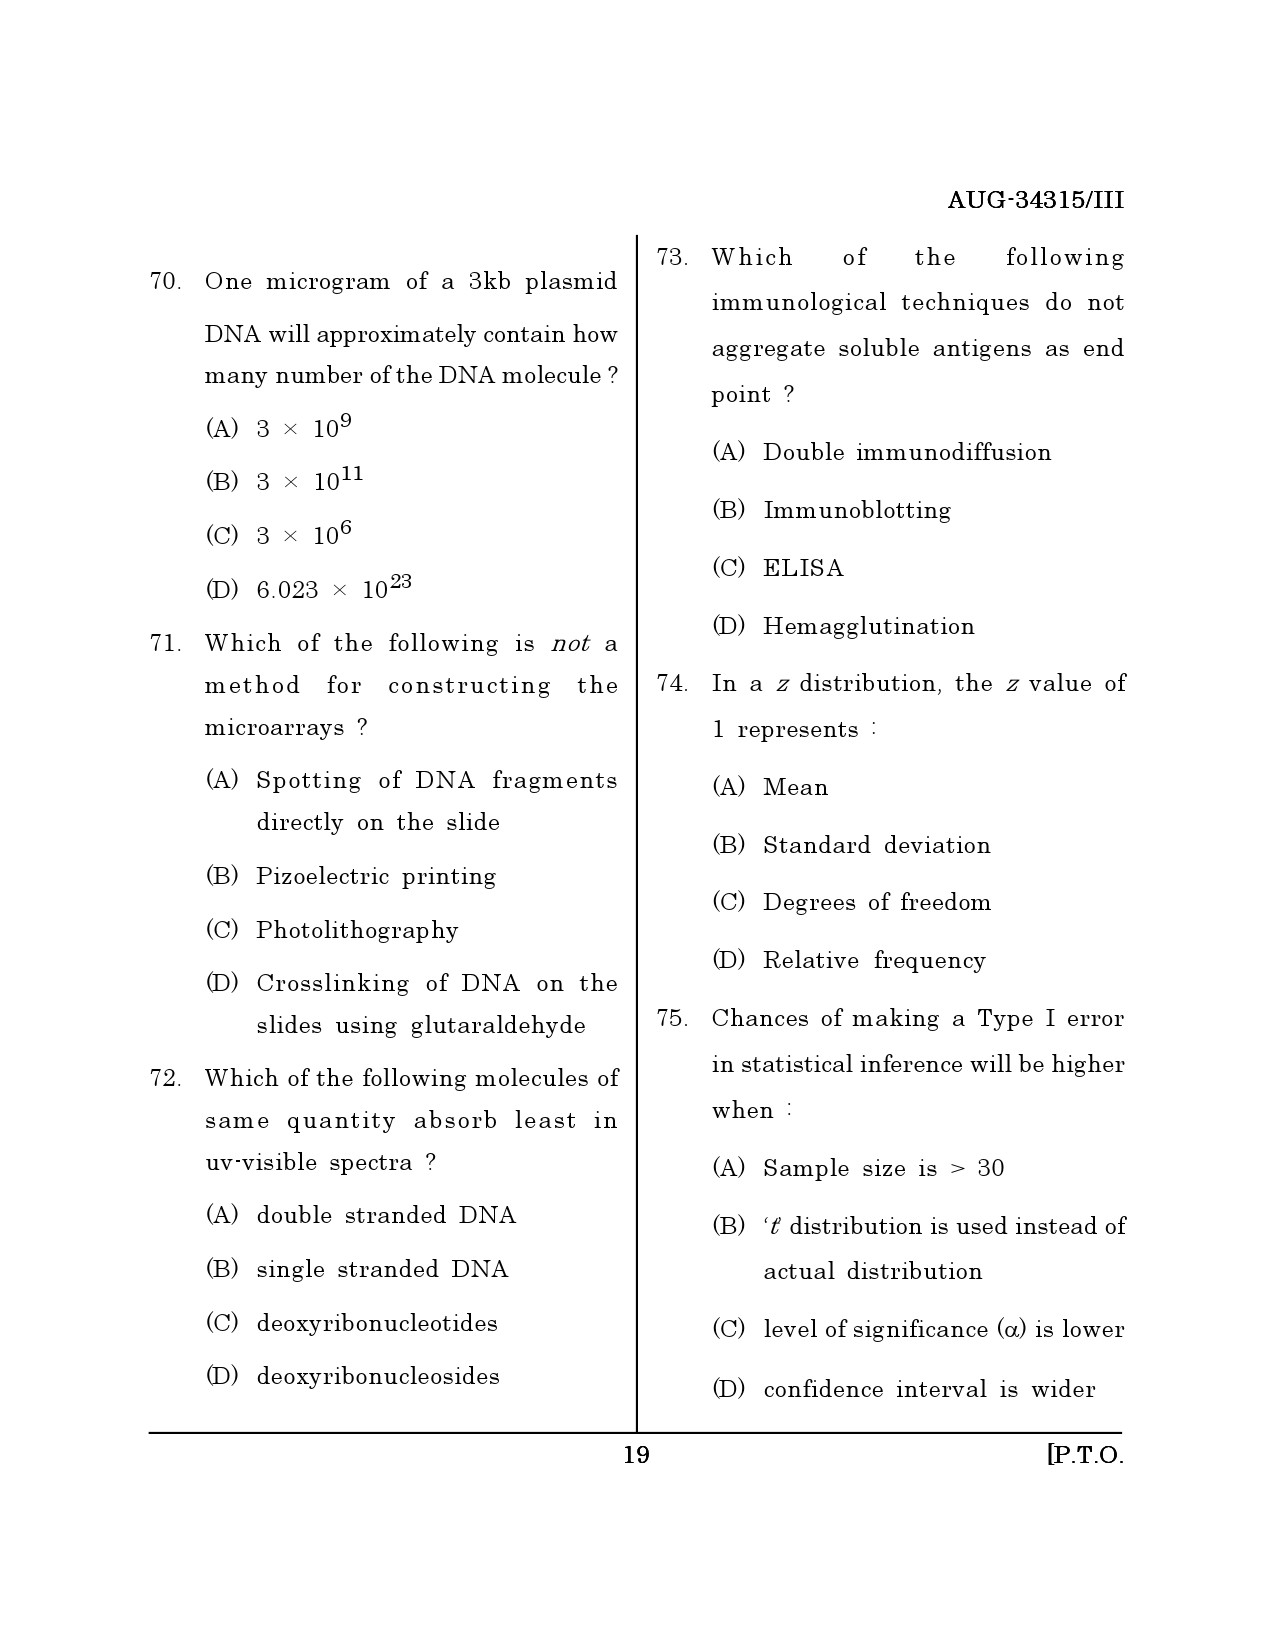 Maharashtra SET Life Sciences Question Paper III August 2015 18